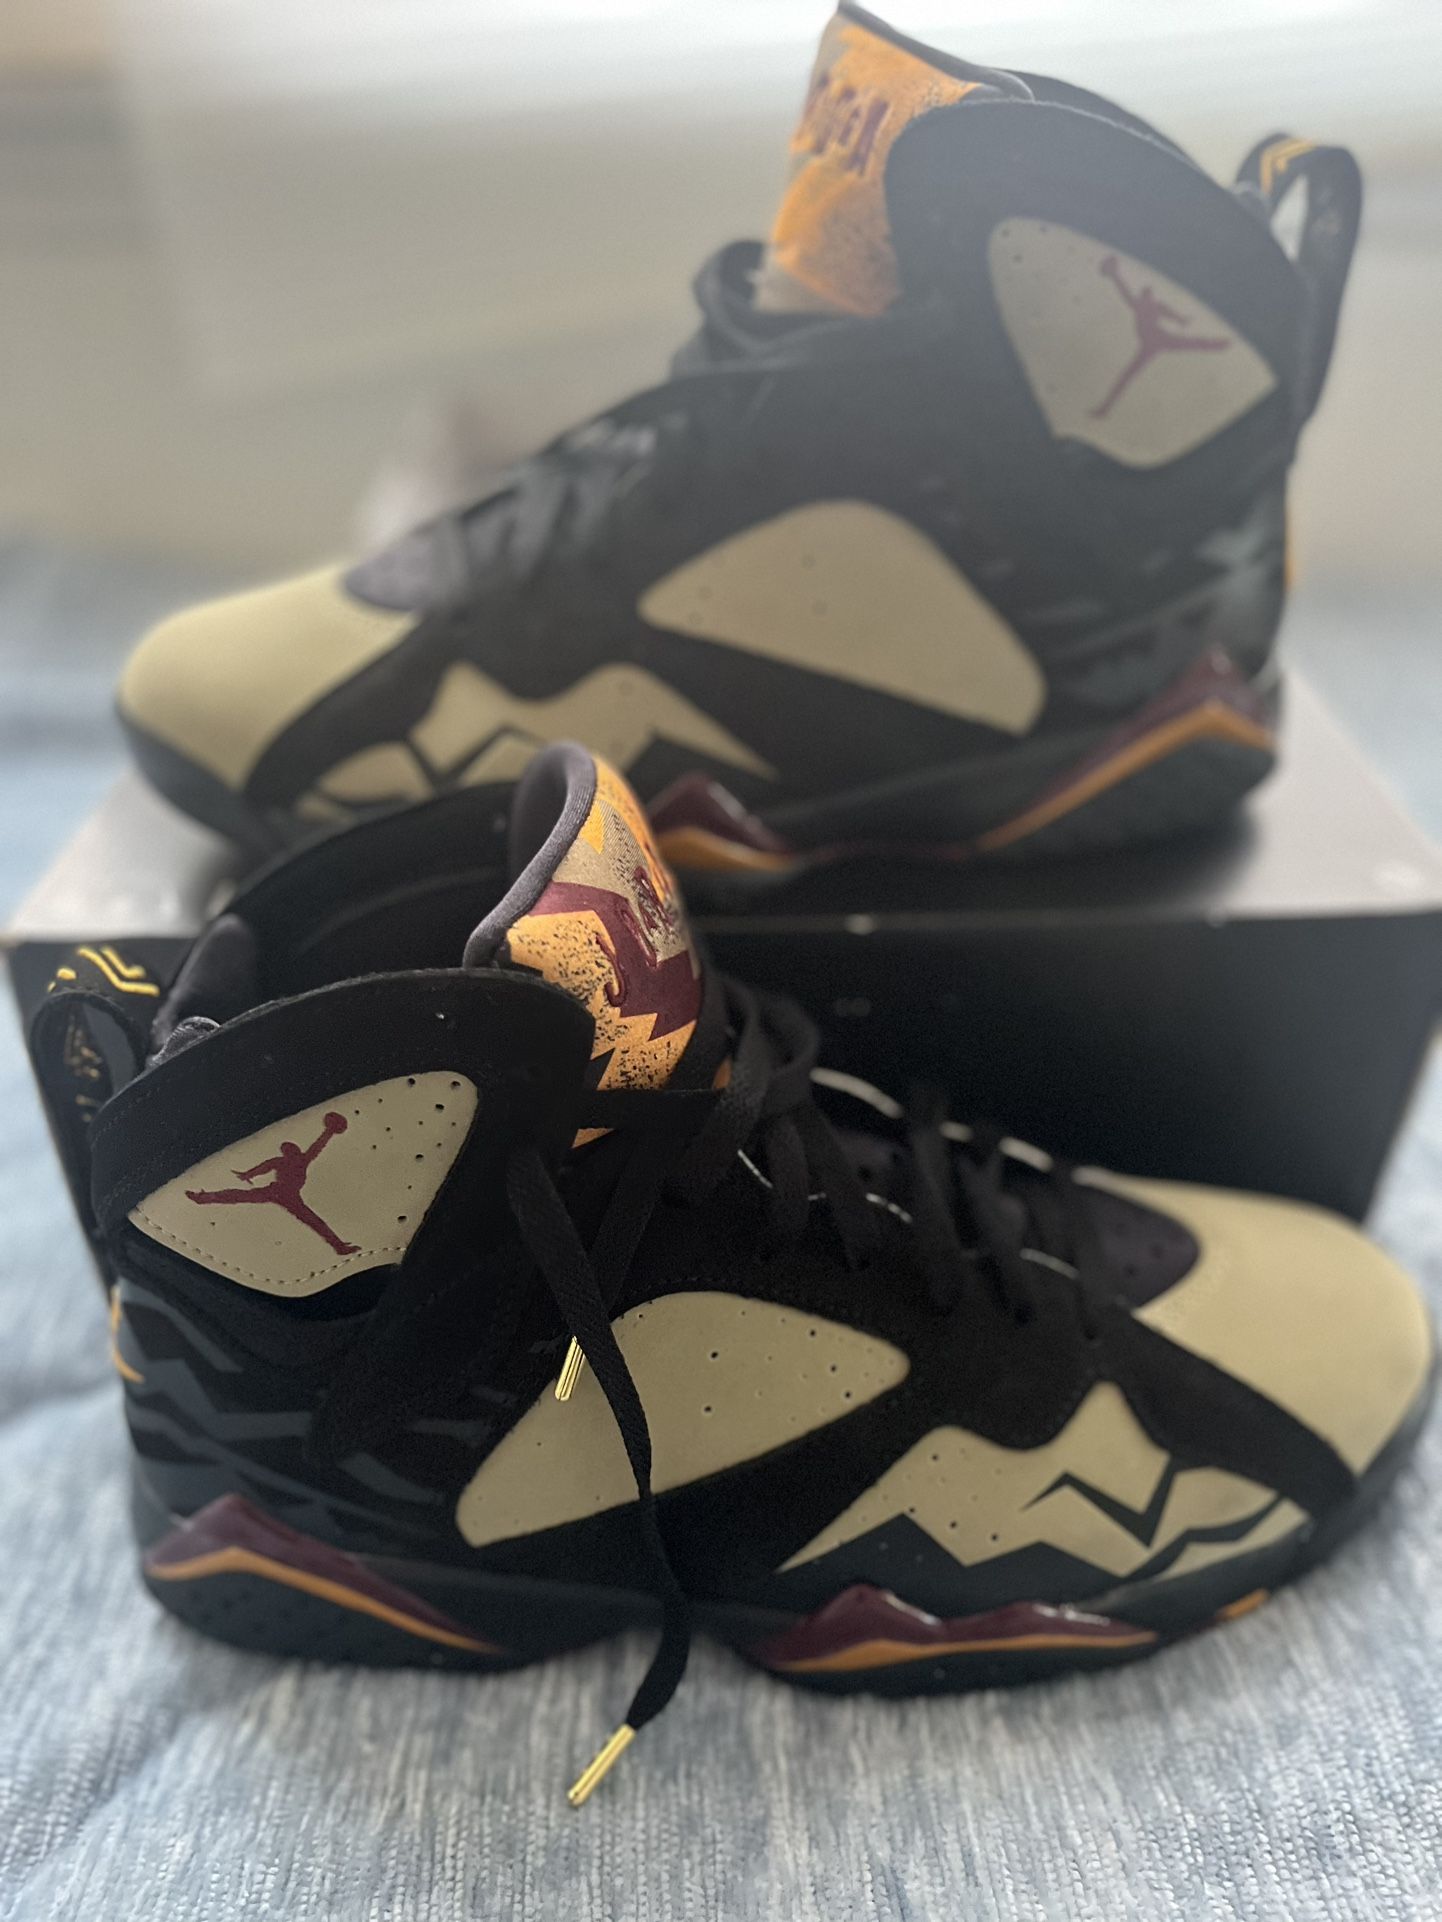 Air Jordan’s New Size 10